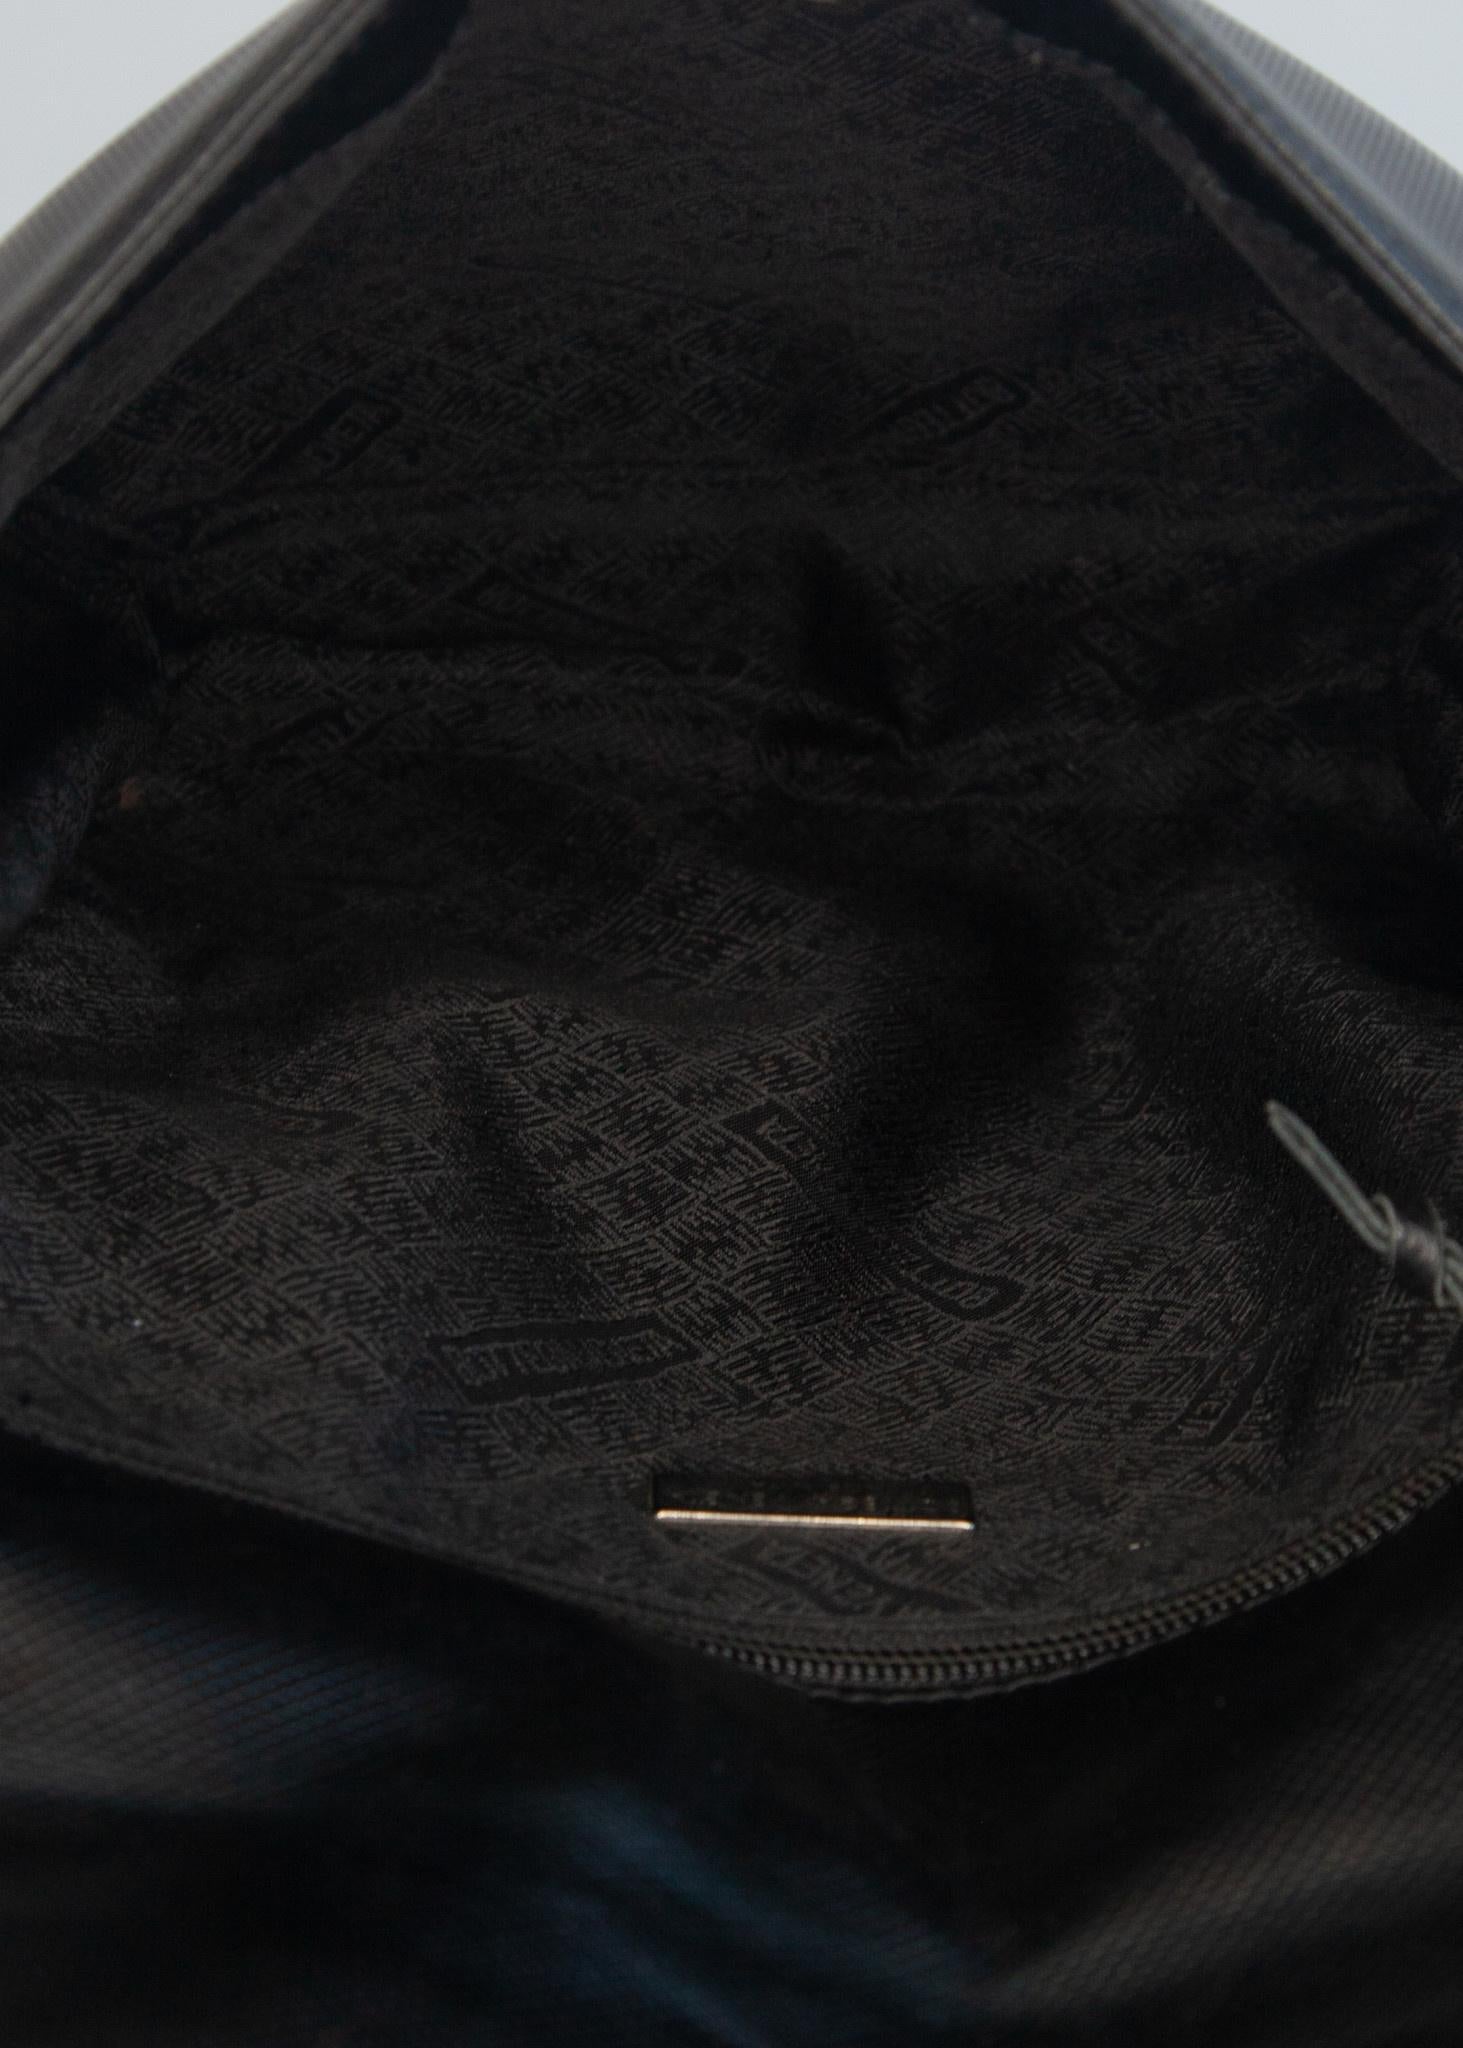 Women's or Men's Bottega Veneta Vintage Black Safiano Leather Flap Bag For Sale